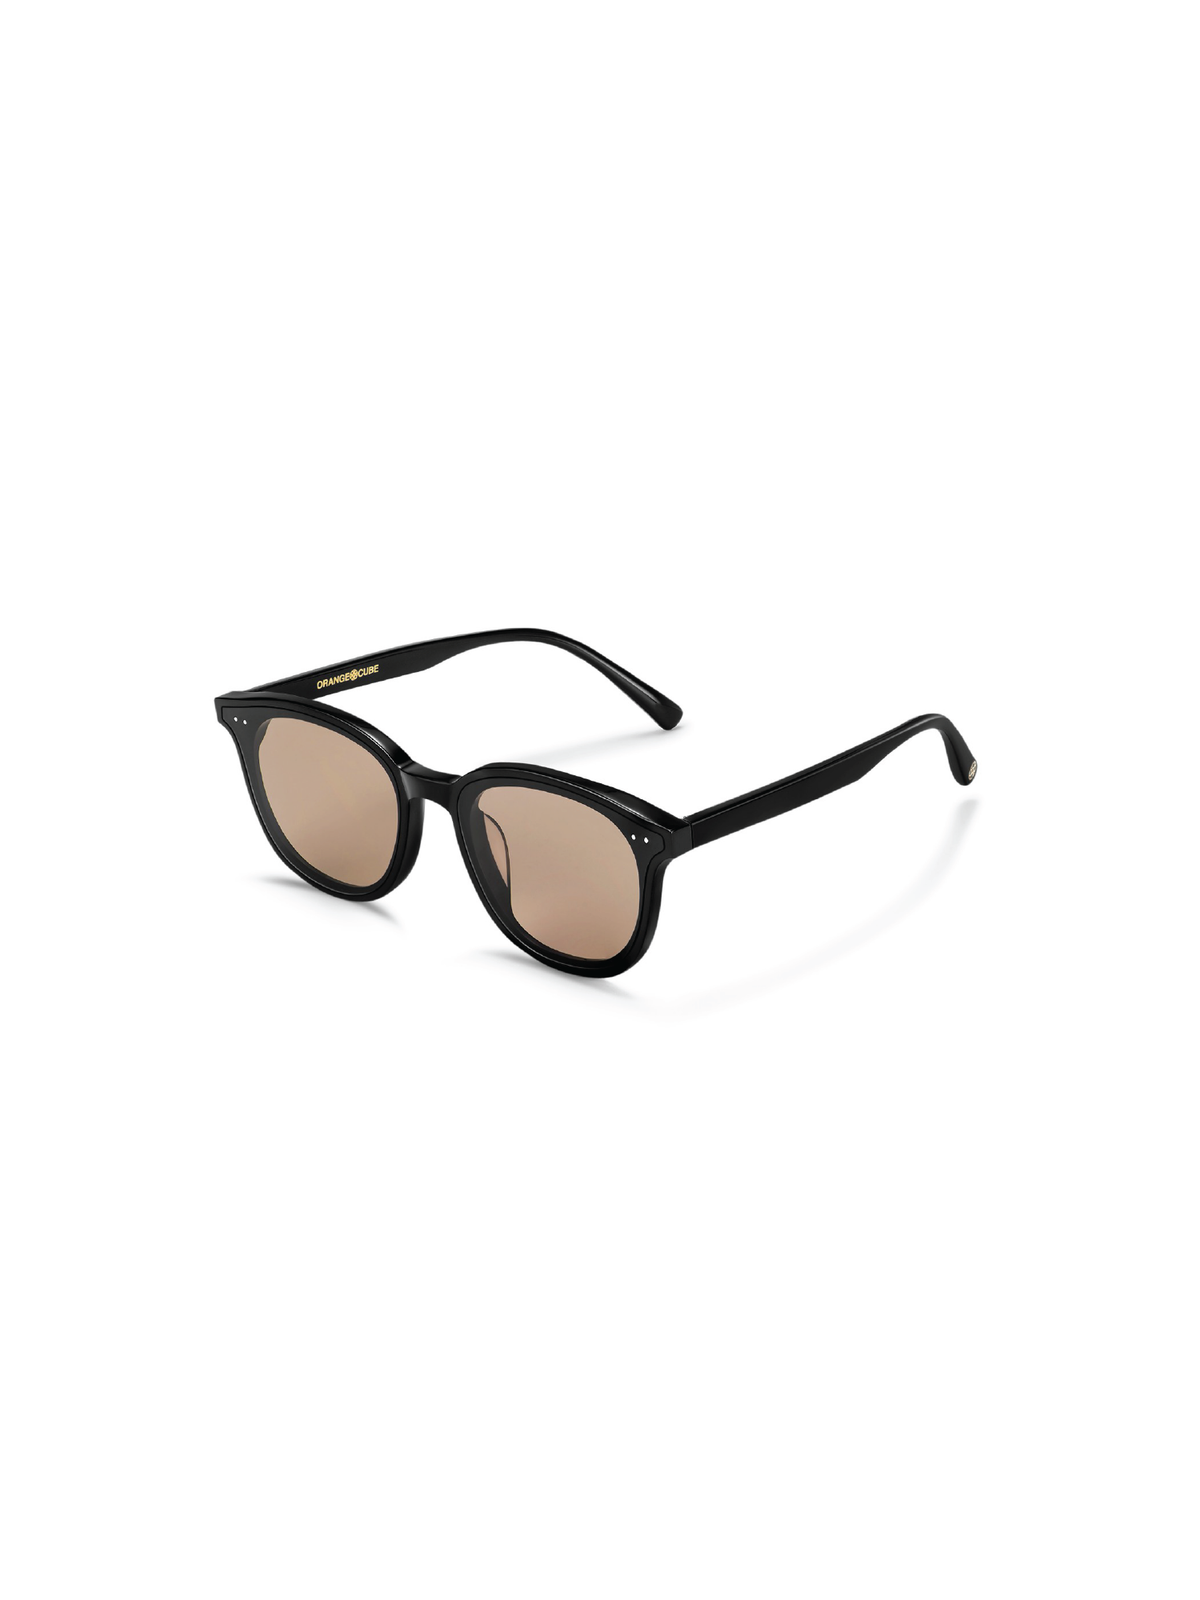 Wayfarer Classic Sunglasses - Brown